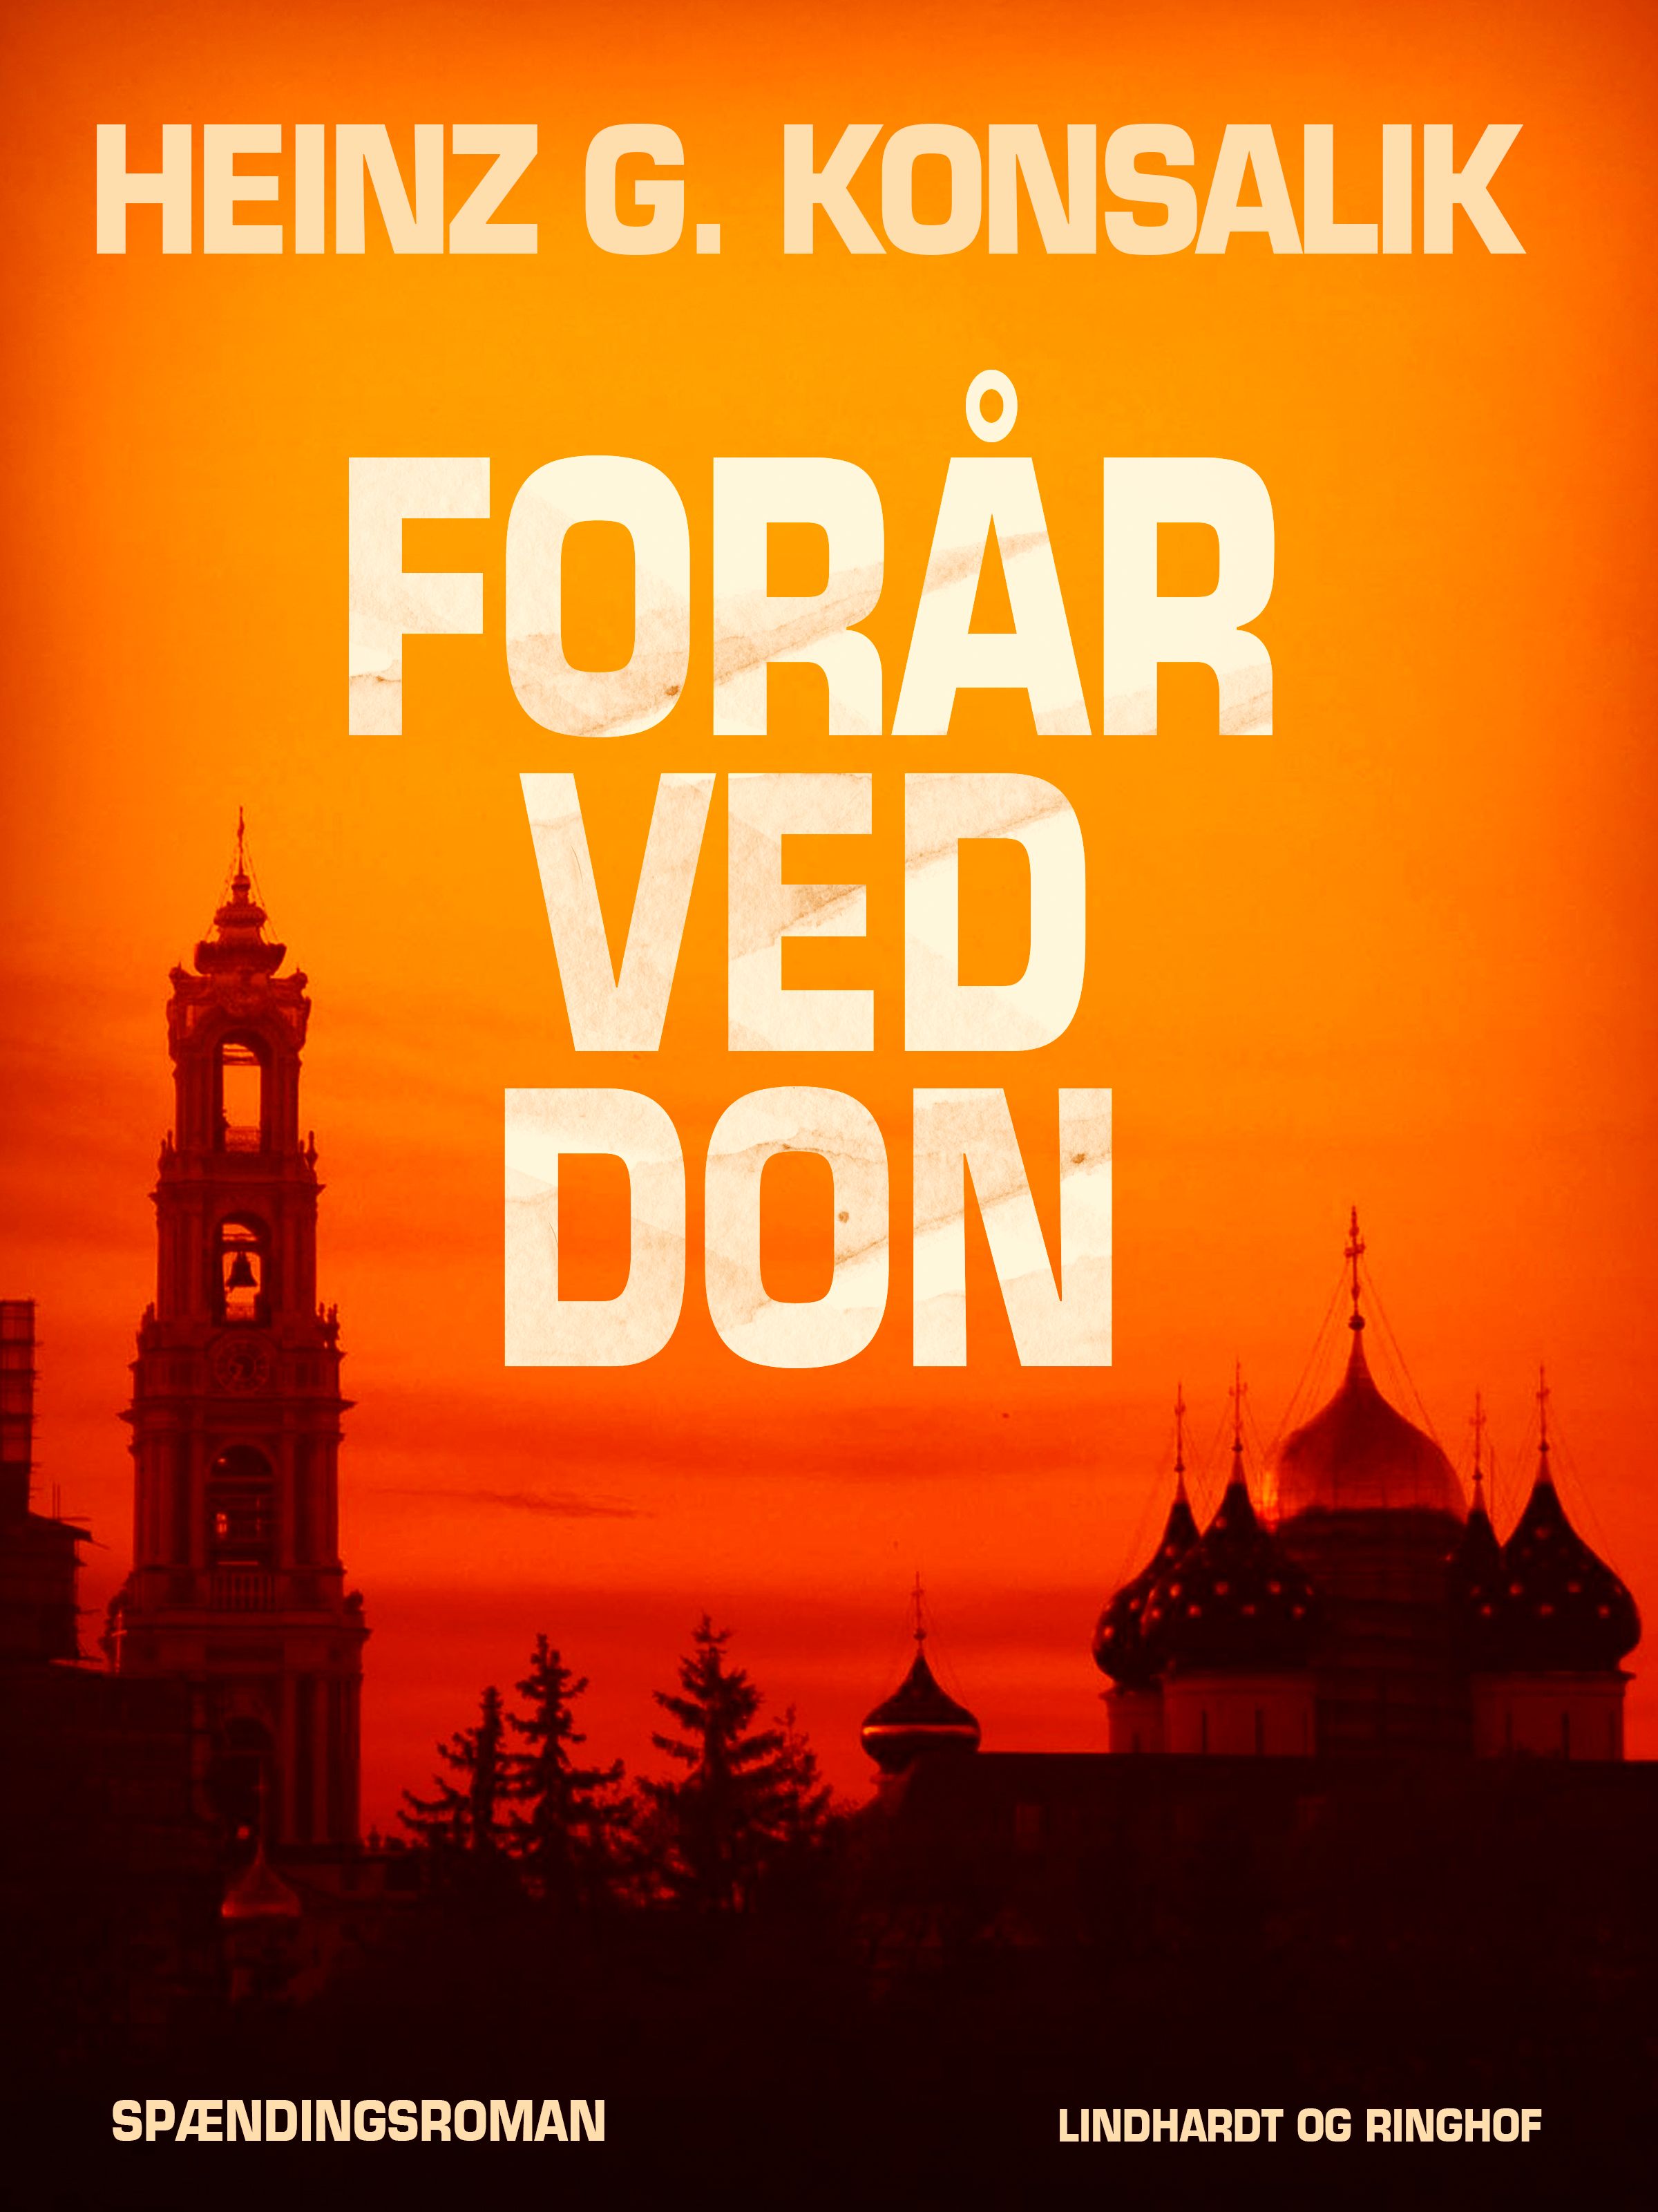 Forår ved Don, audiobook by Heinz G. Konsalik